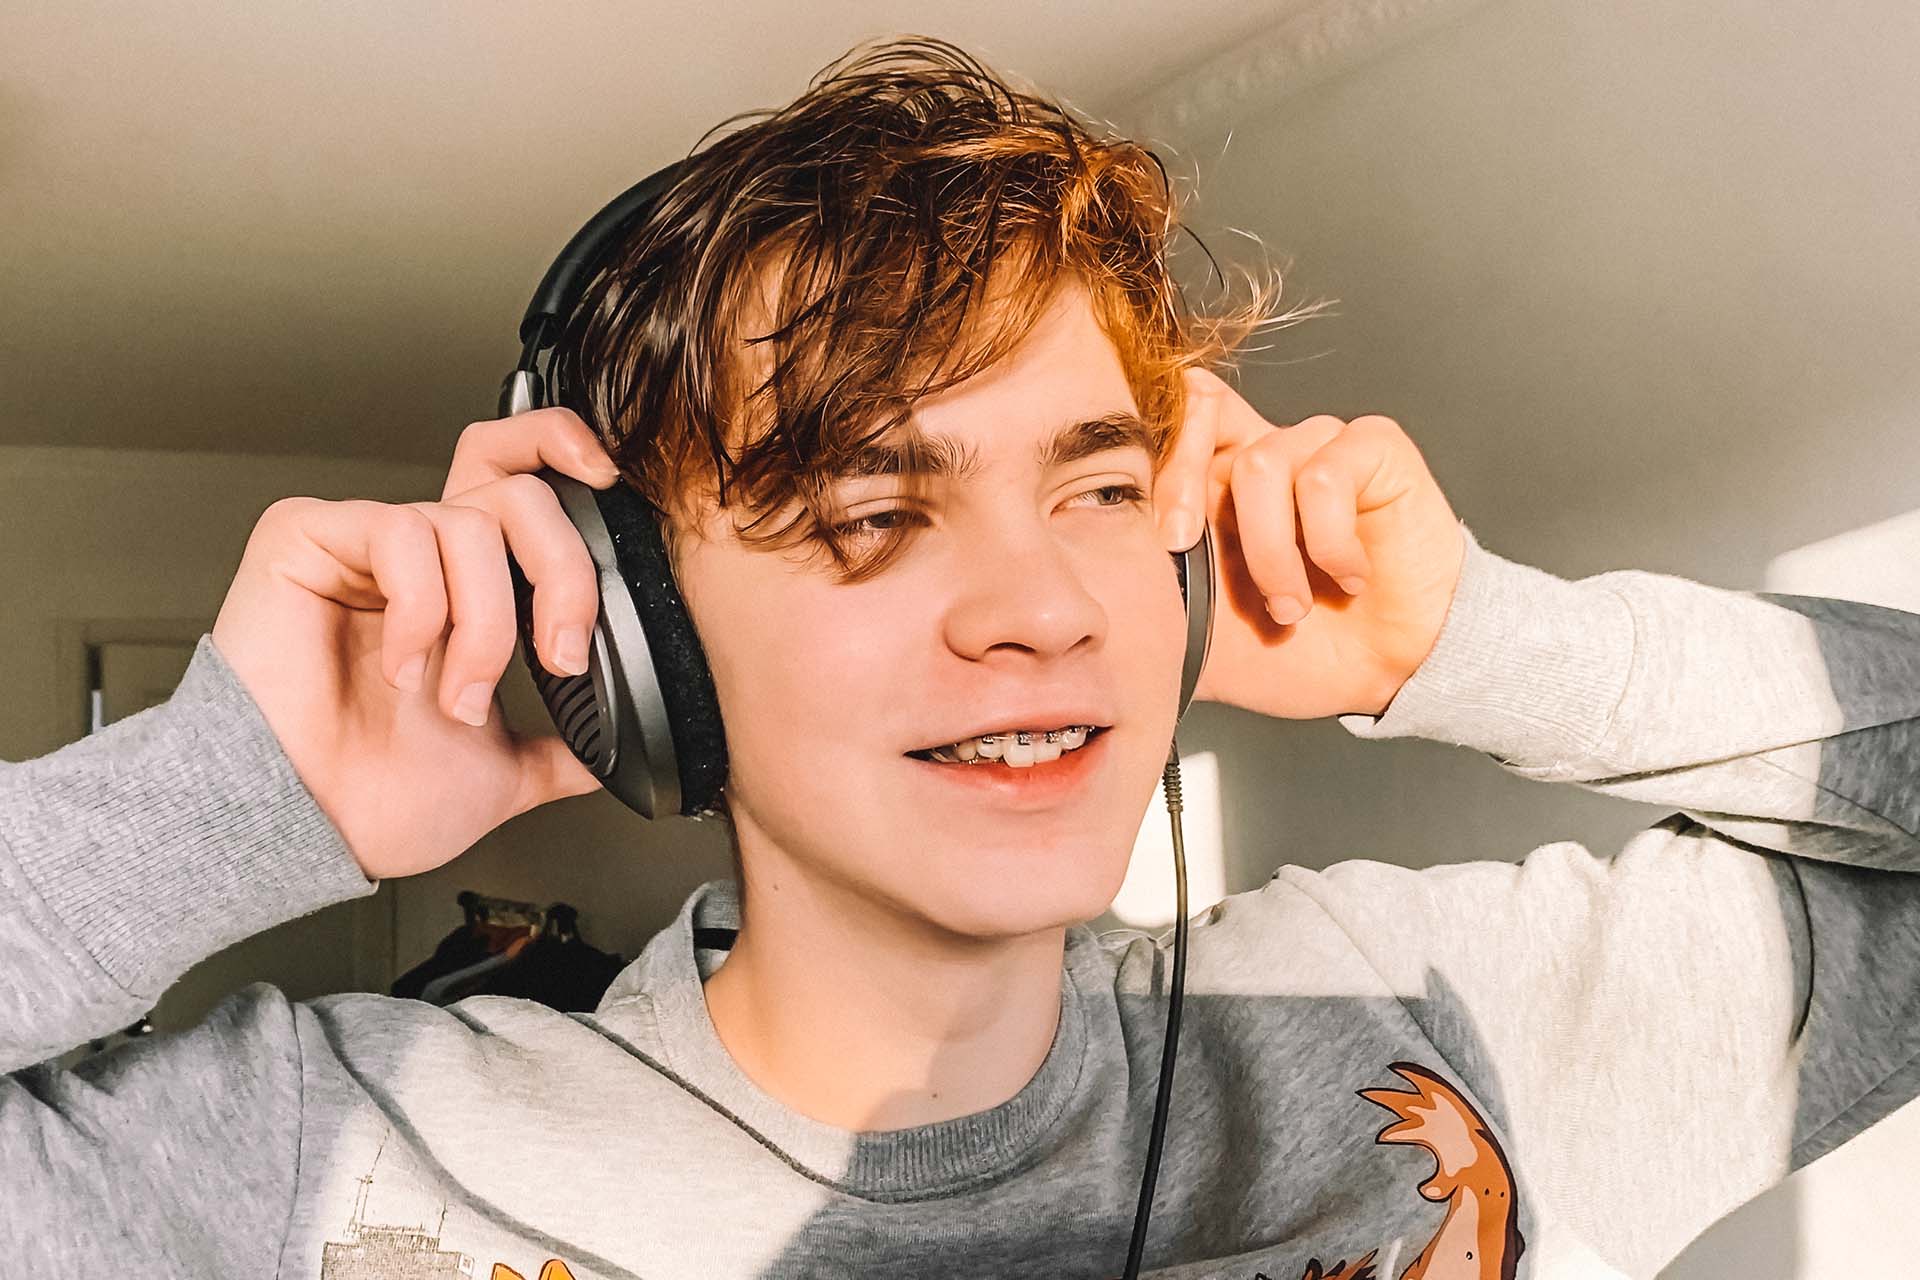 Teen boy with braces listens to music on headphones in La Brea, Los Angeles, CA